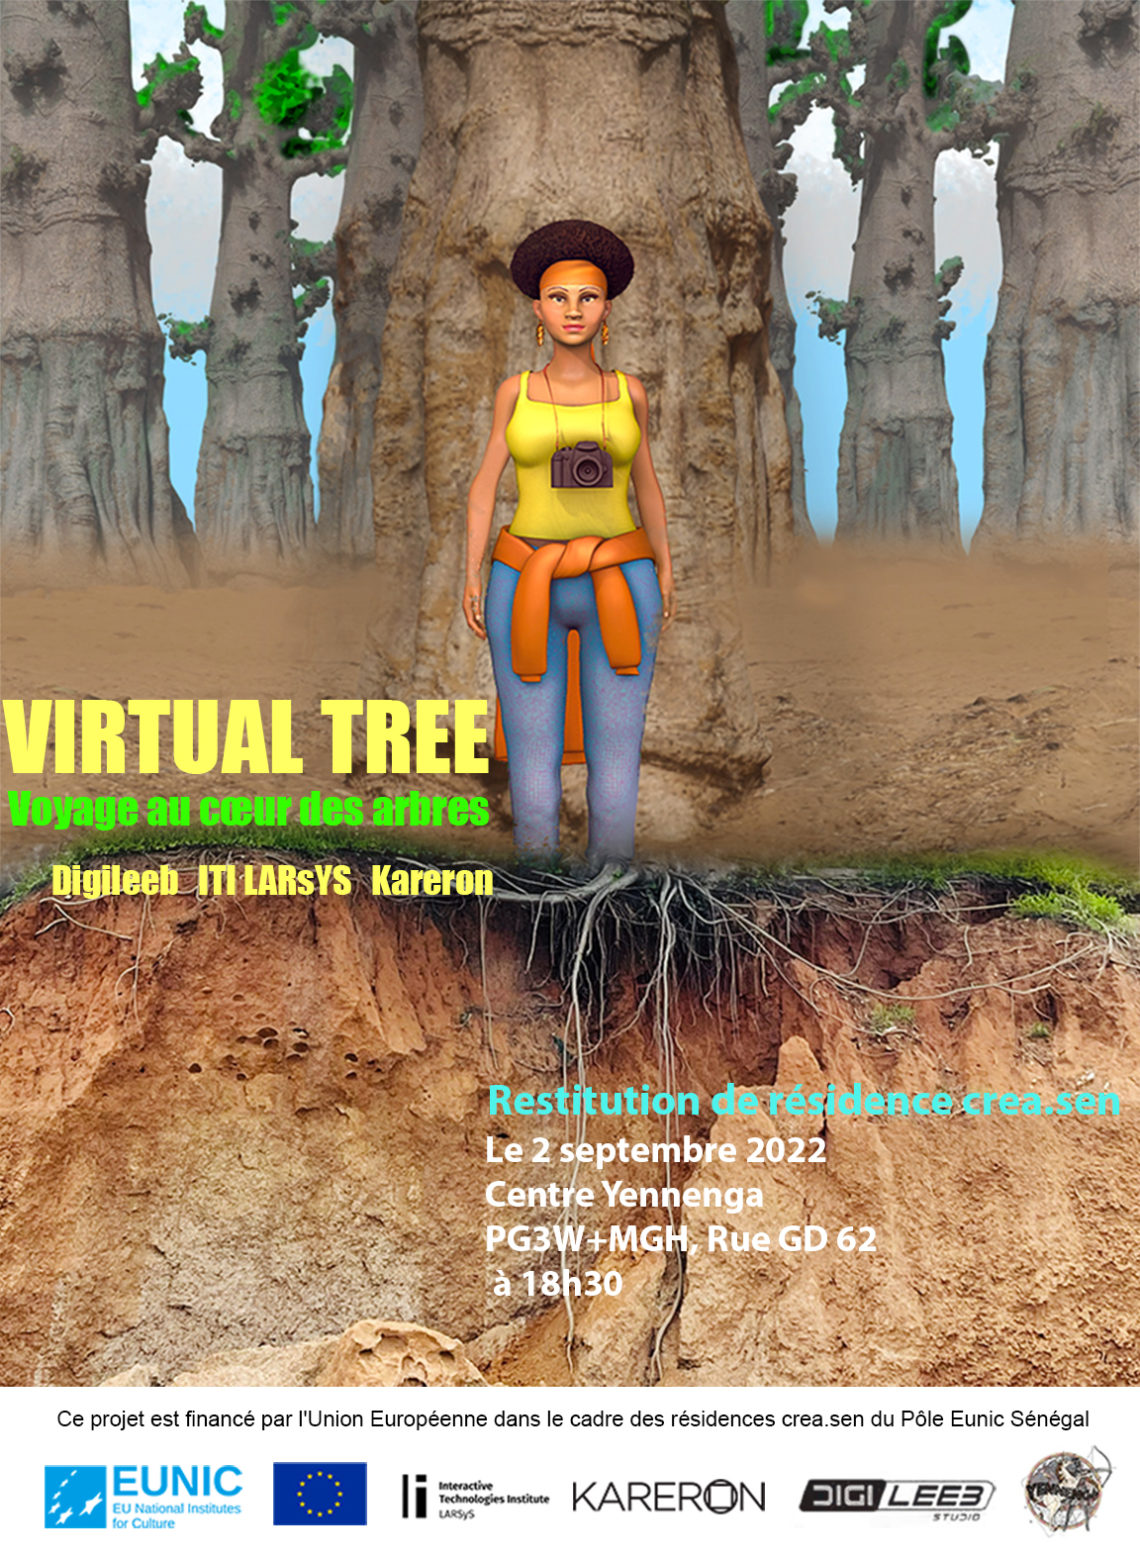 Restitution de la résidence crea.sen, Virtual tree, Centre Yennenga, Dakar 2 septembre 22